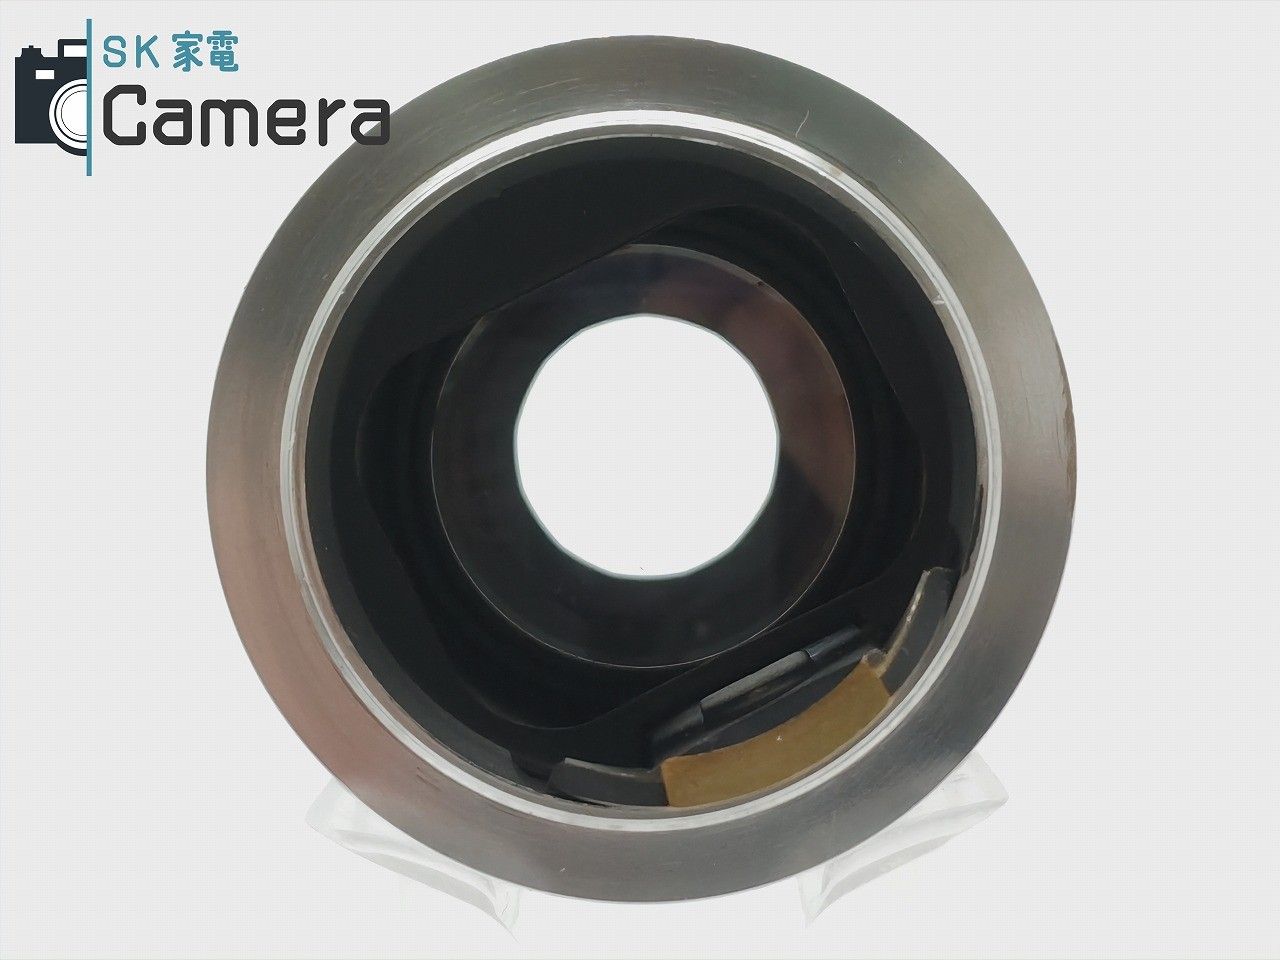 Canon SERENAR 135ｍｍ F4 L39 + 135ｍｍ ファインダー 革ケース メタルキャップ付き キャノン - メルカリ